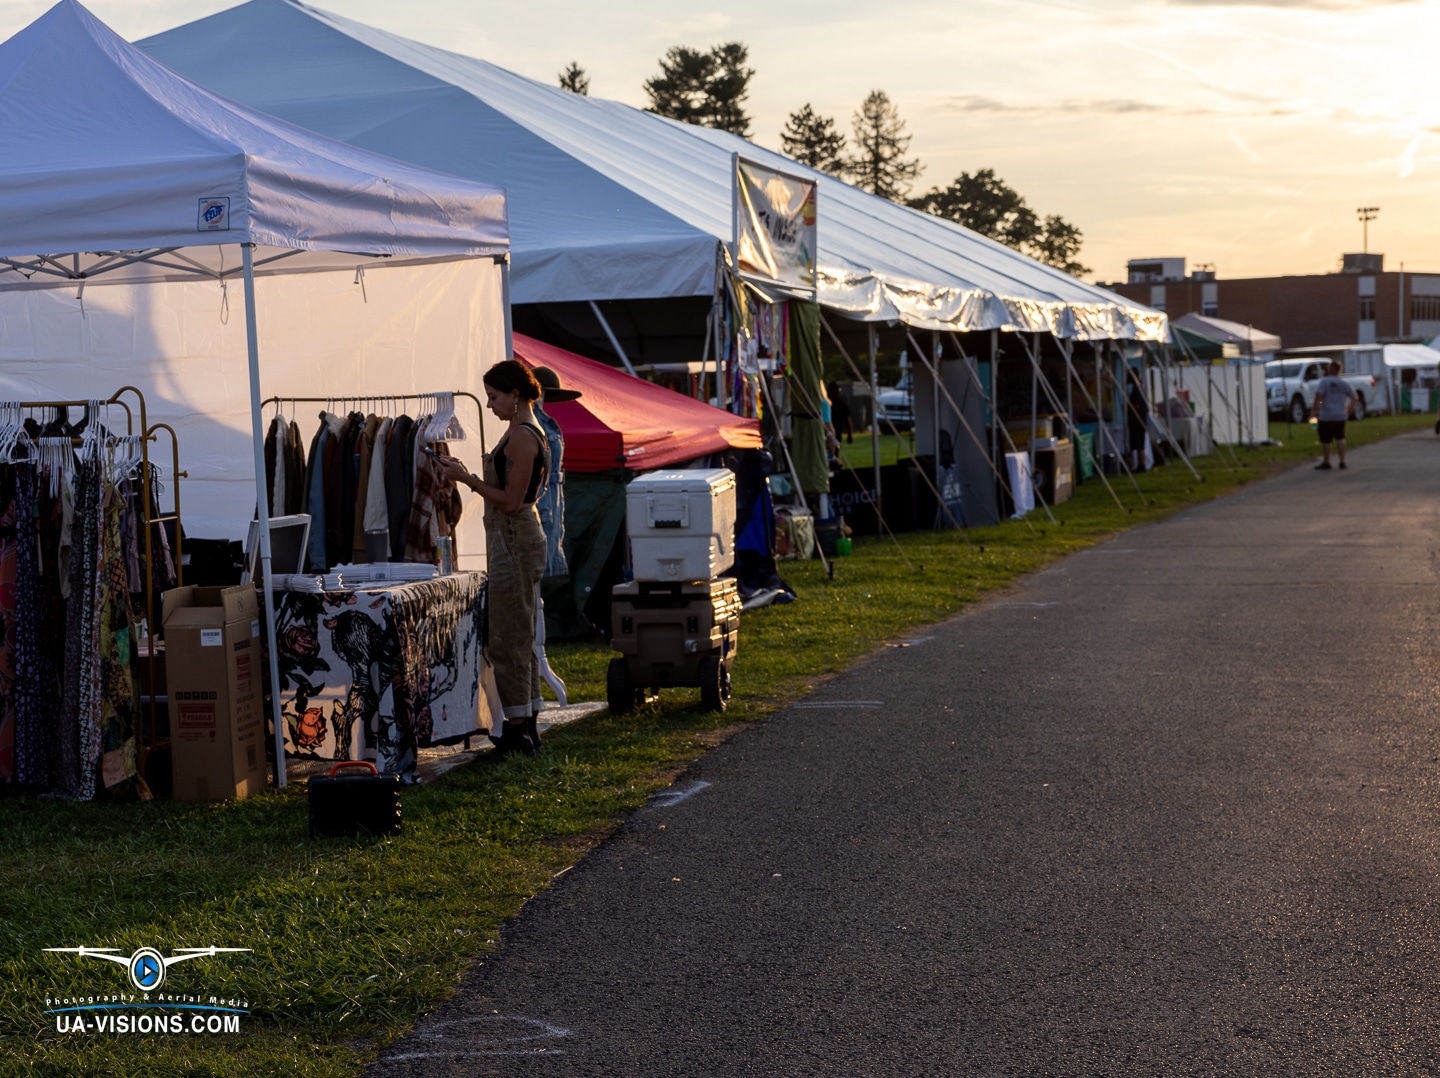 Twilight hustle along the vendor row at Healing Appalachia, where every tent has a tale.